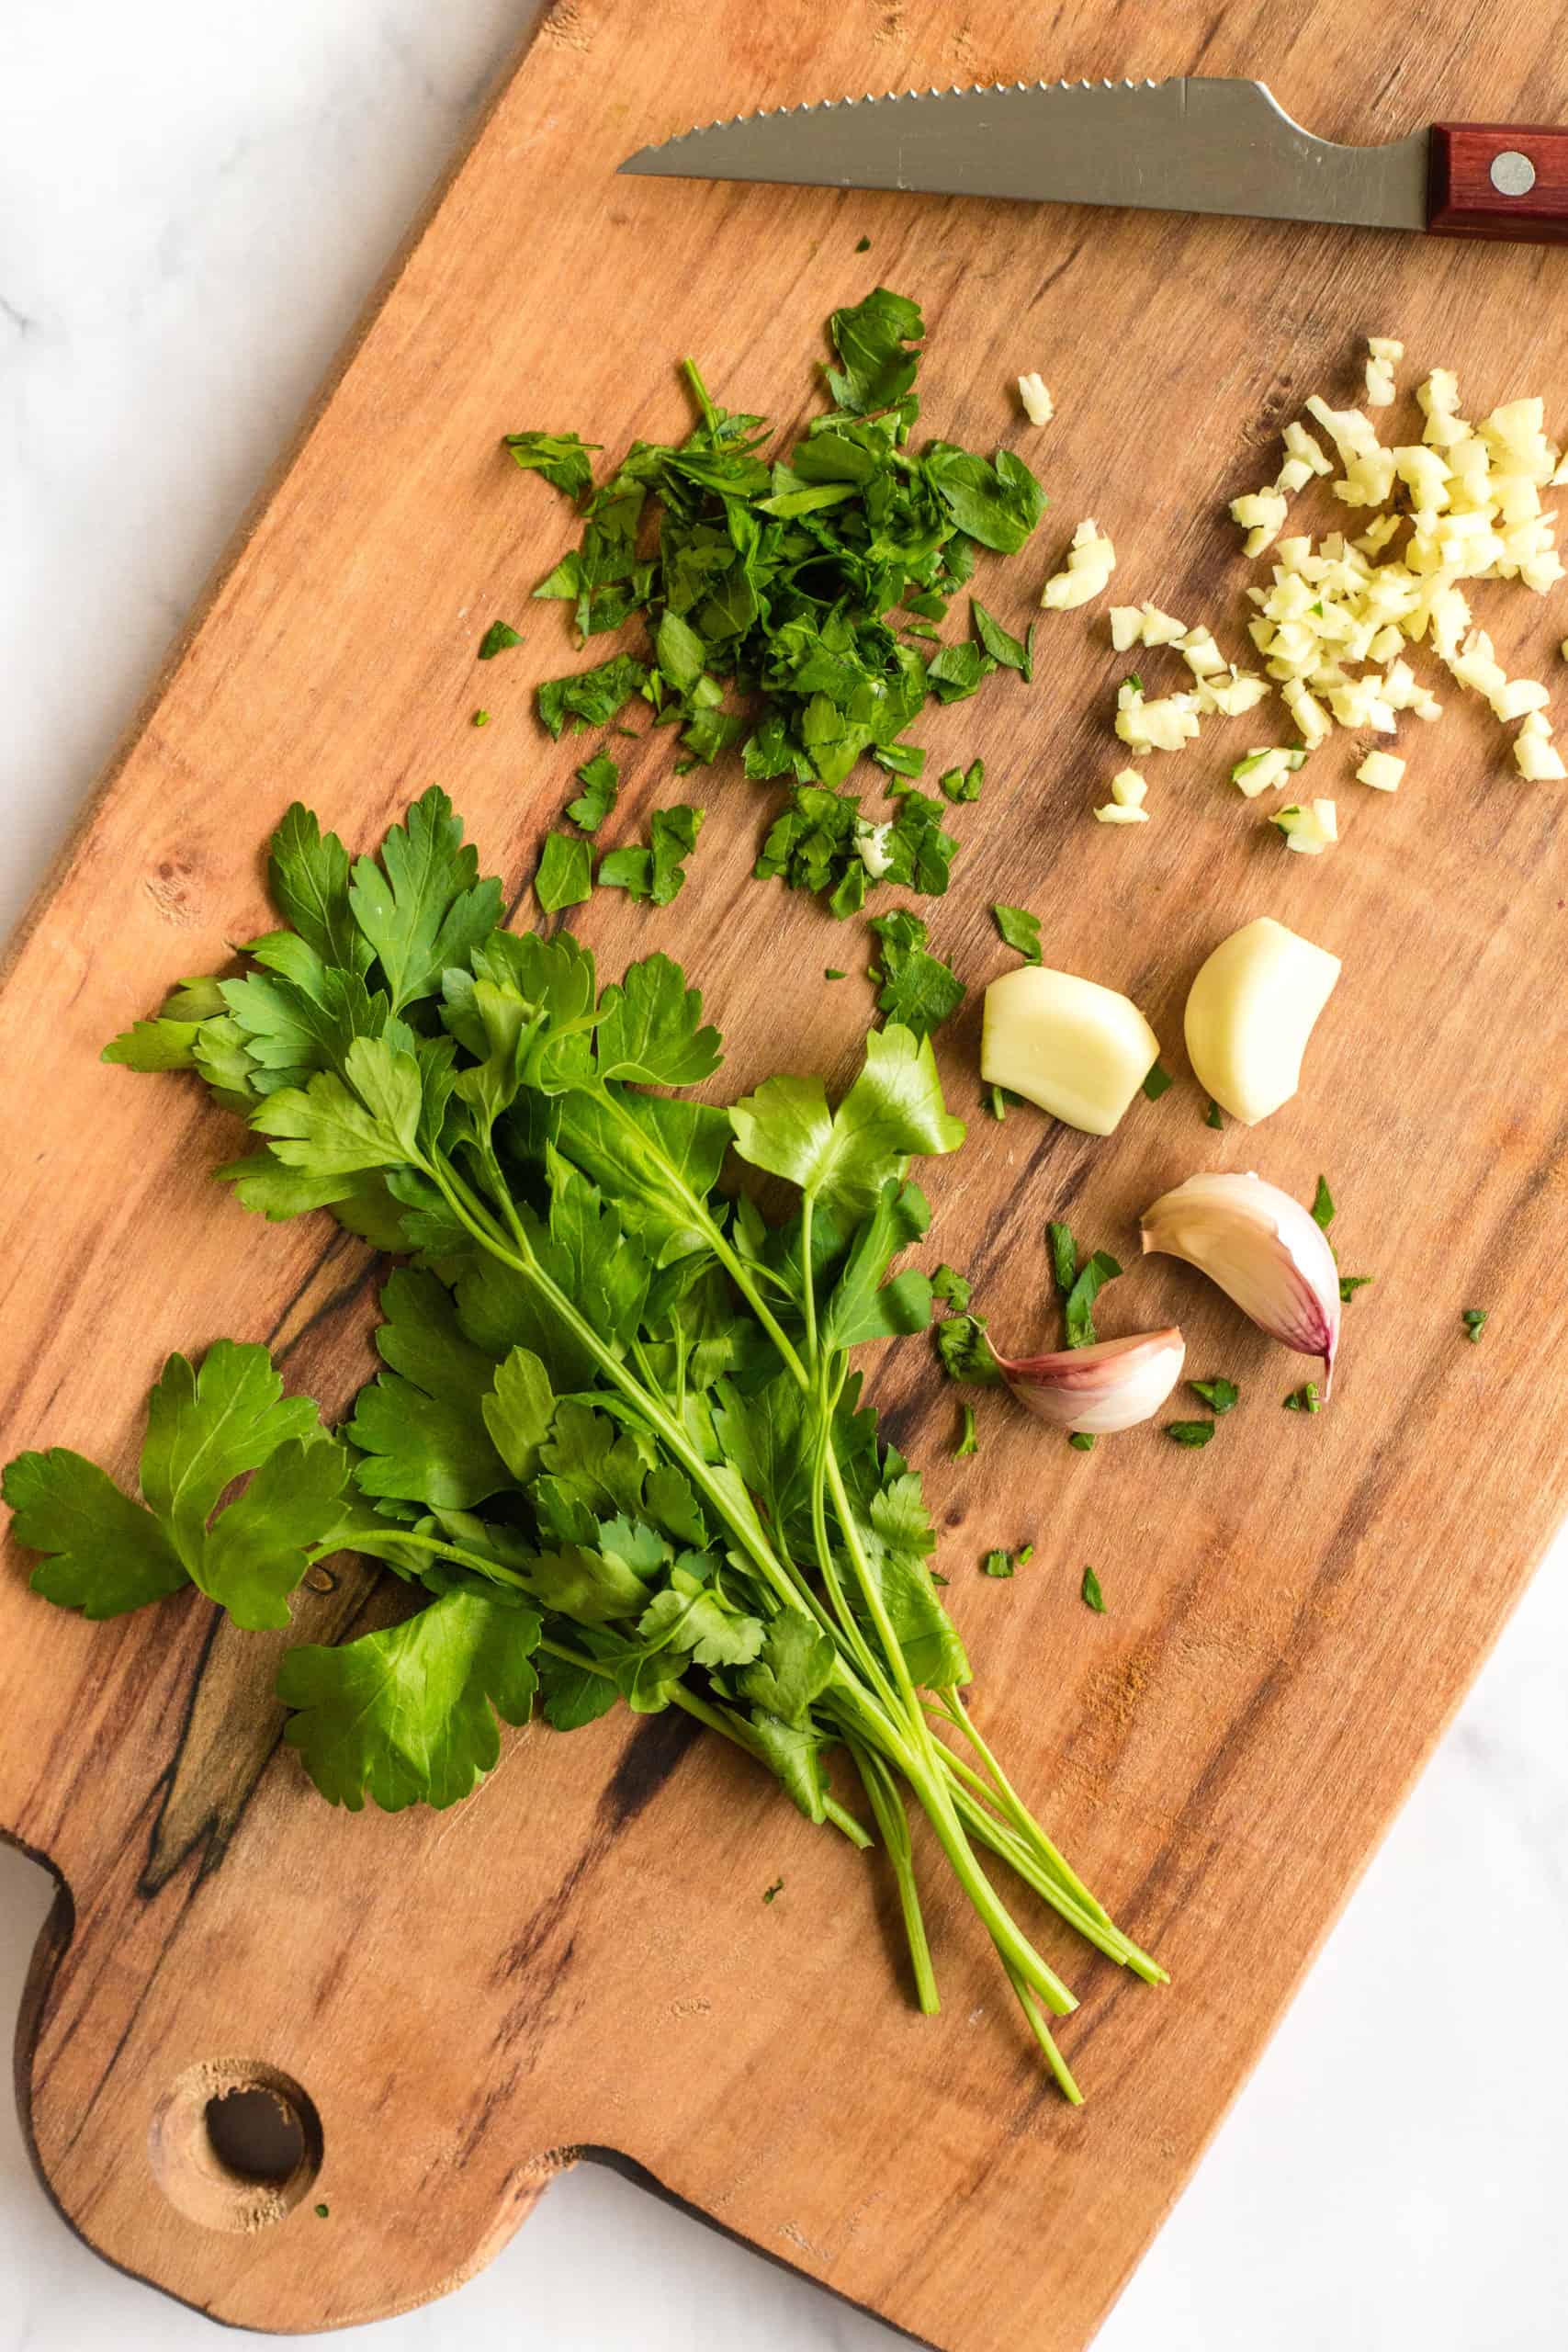 Fresh garlic and parsley on the chopping board.